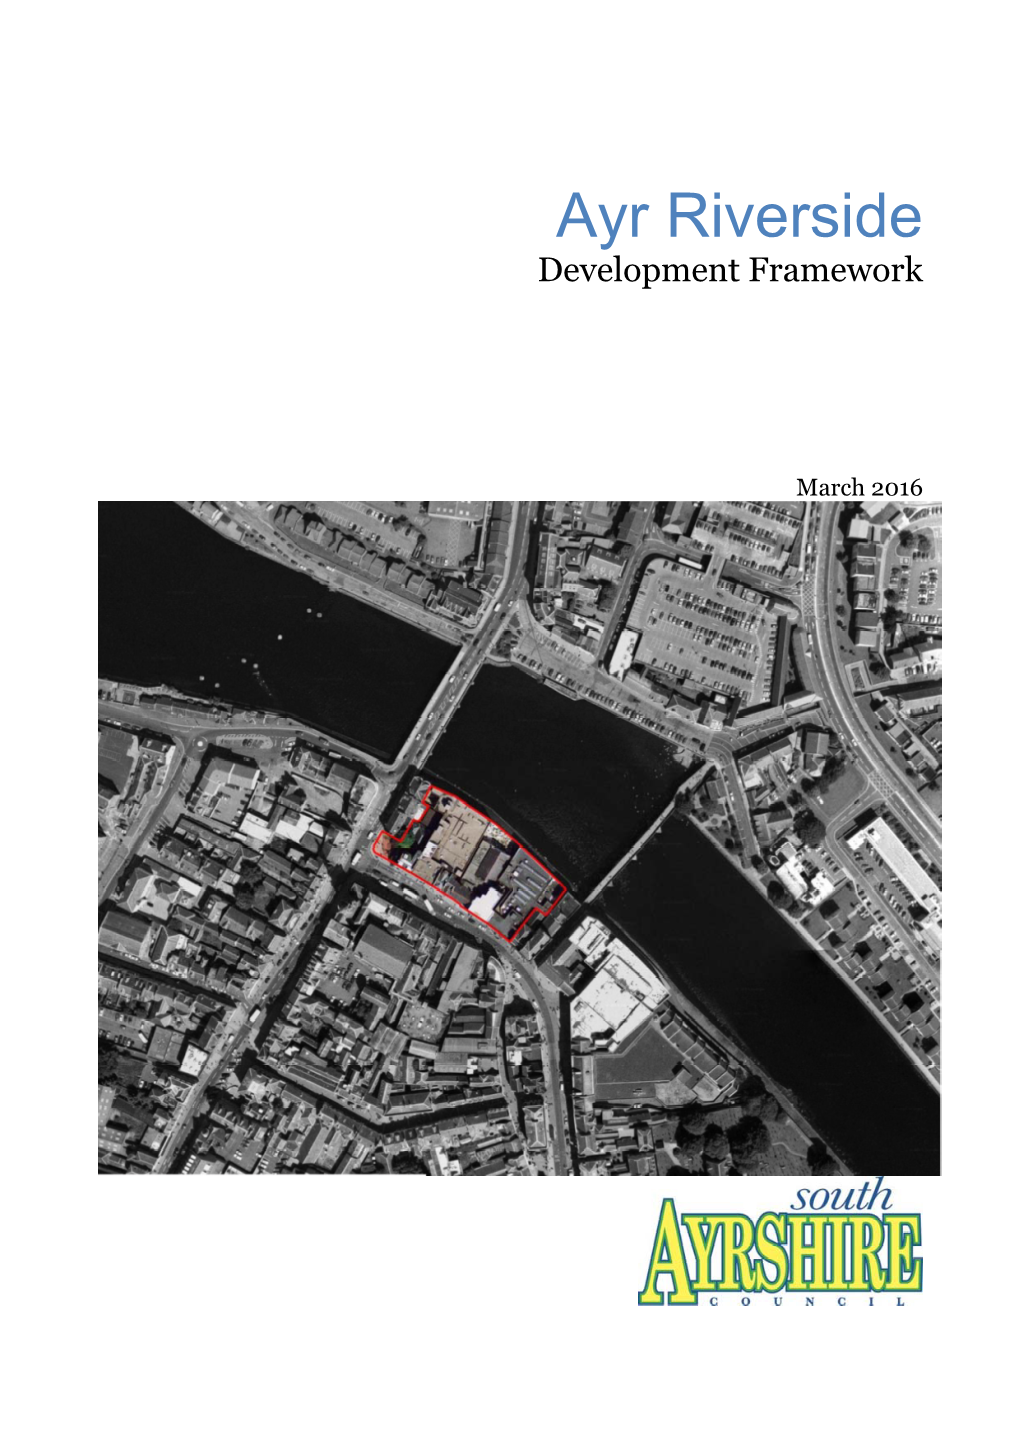 Ayr Riverside Development Framework